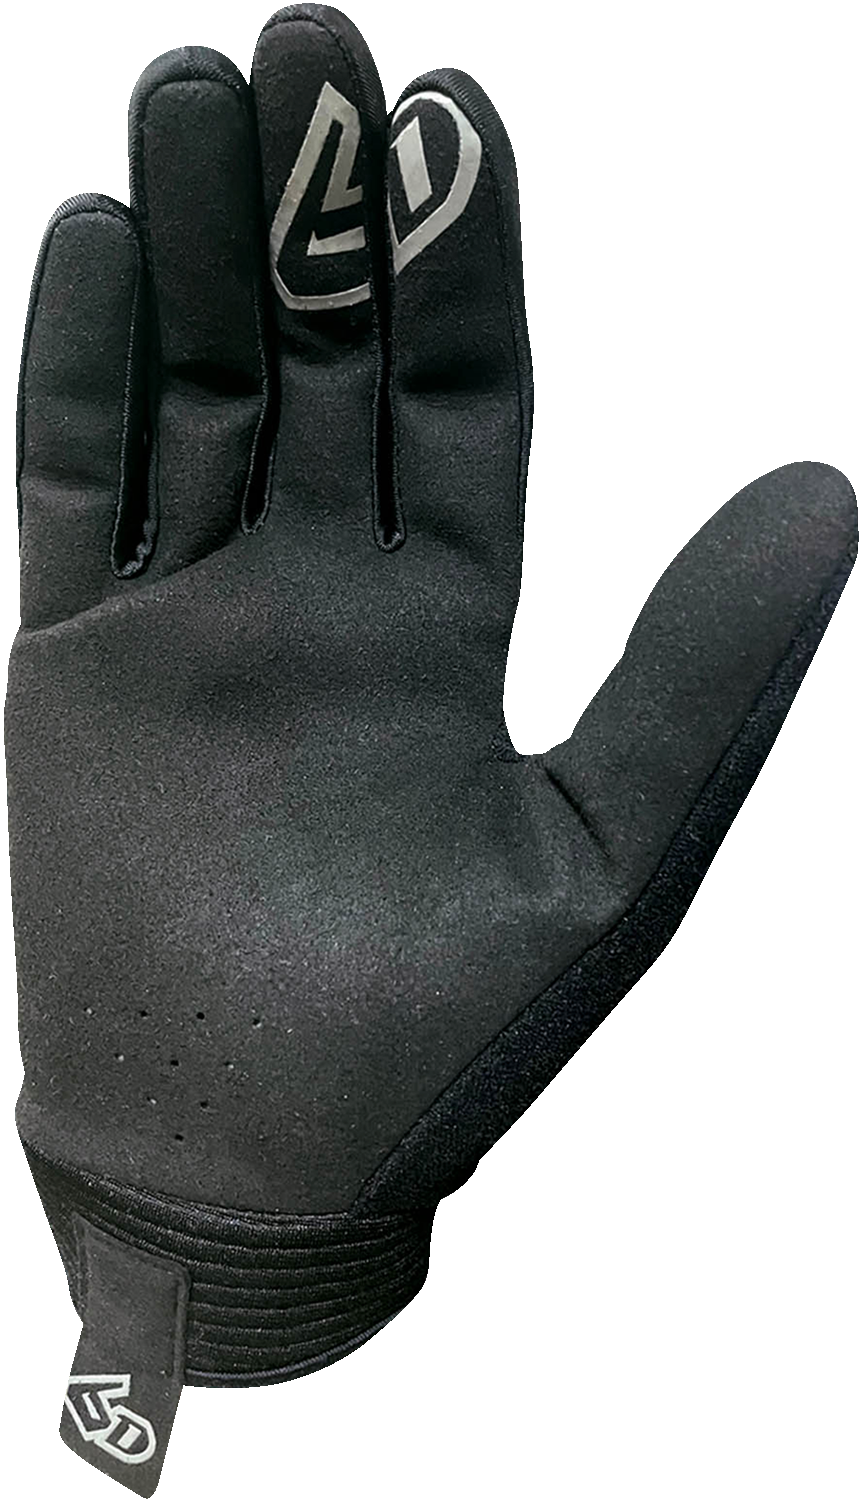 6D MTB Gloves - Black - Large 52-4007